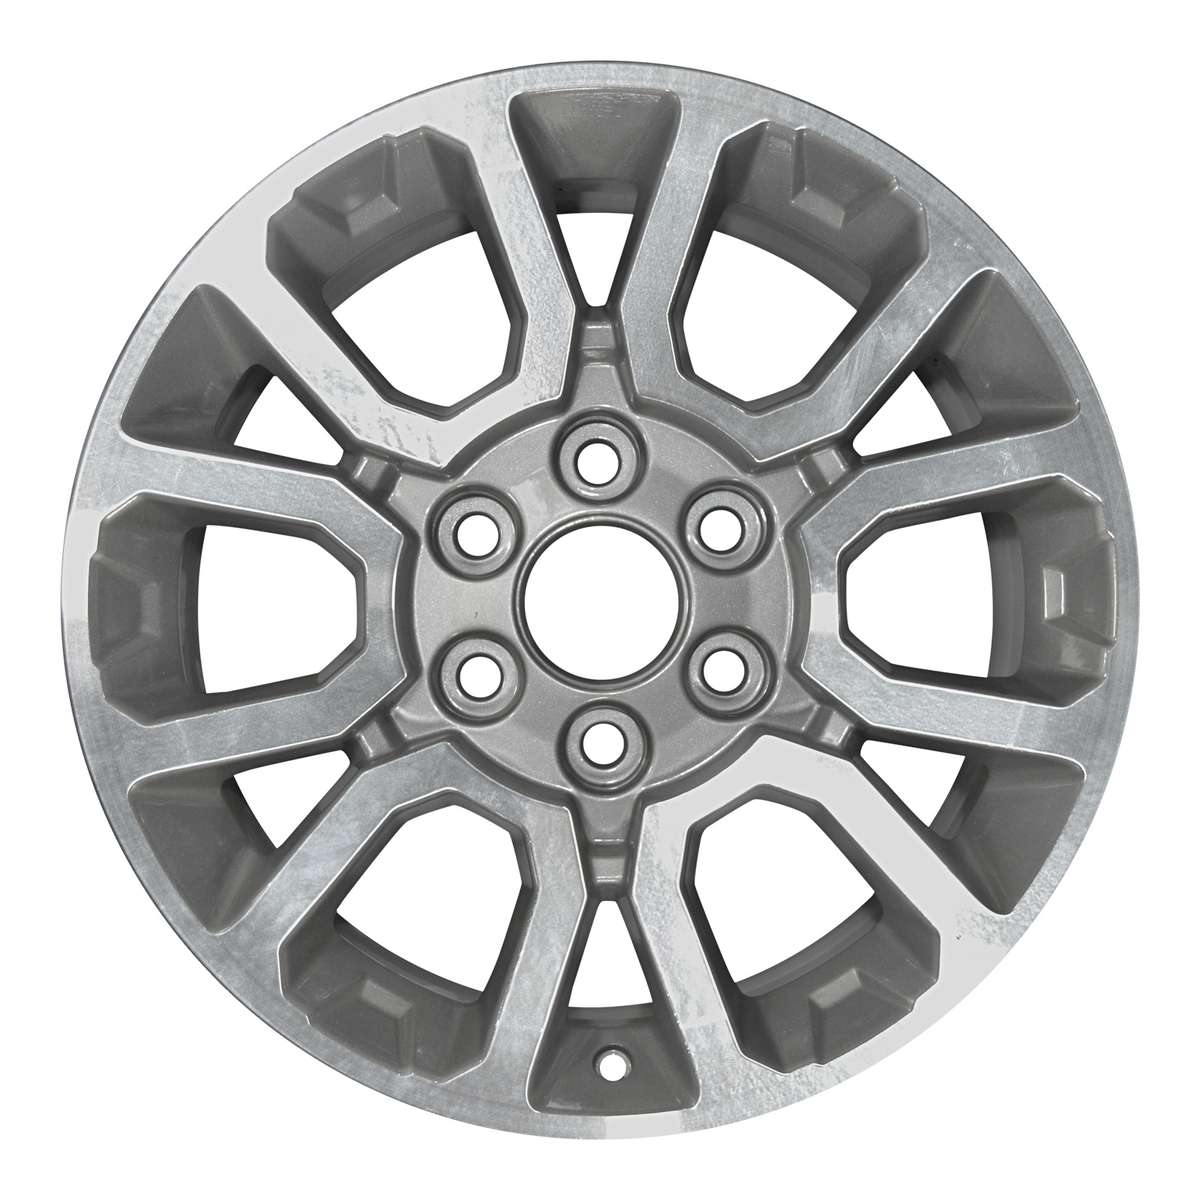 2021 GMC Yukon XL New 18" Replacement Wheel Rim RW5649MS